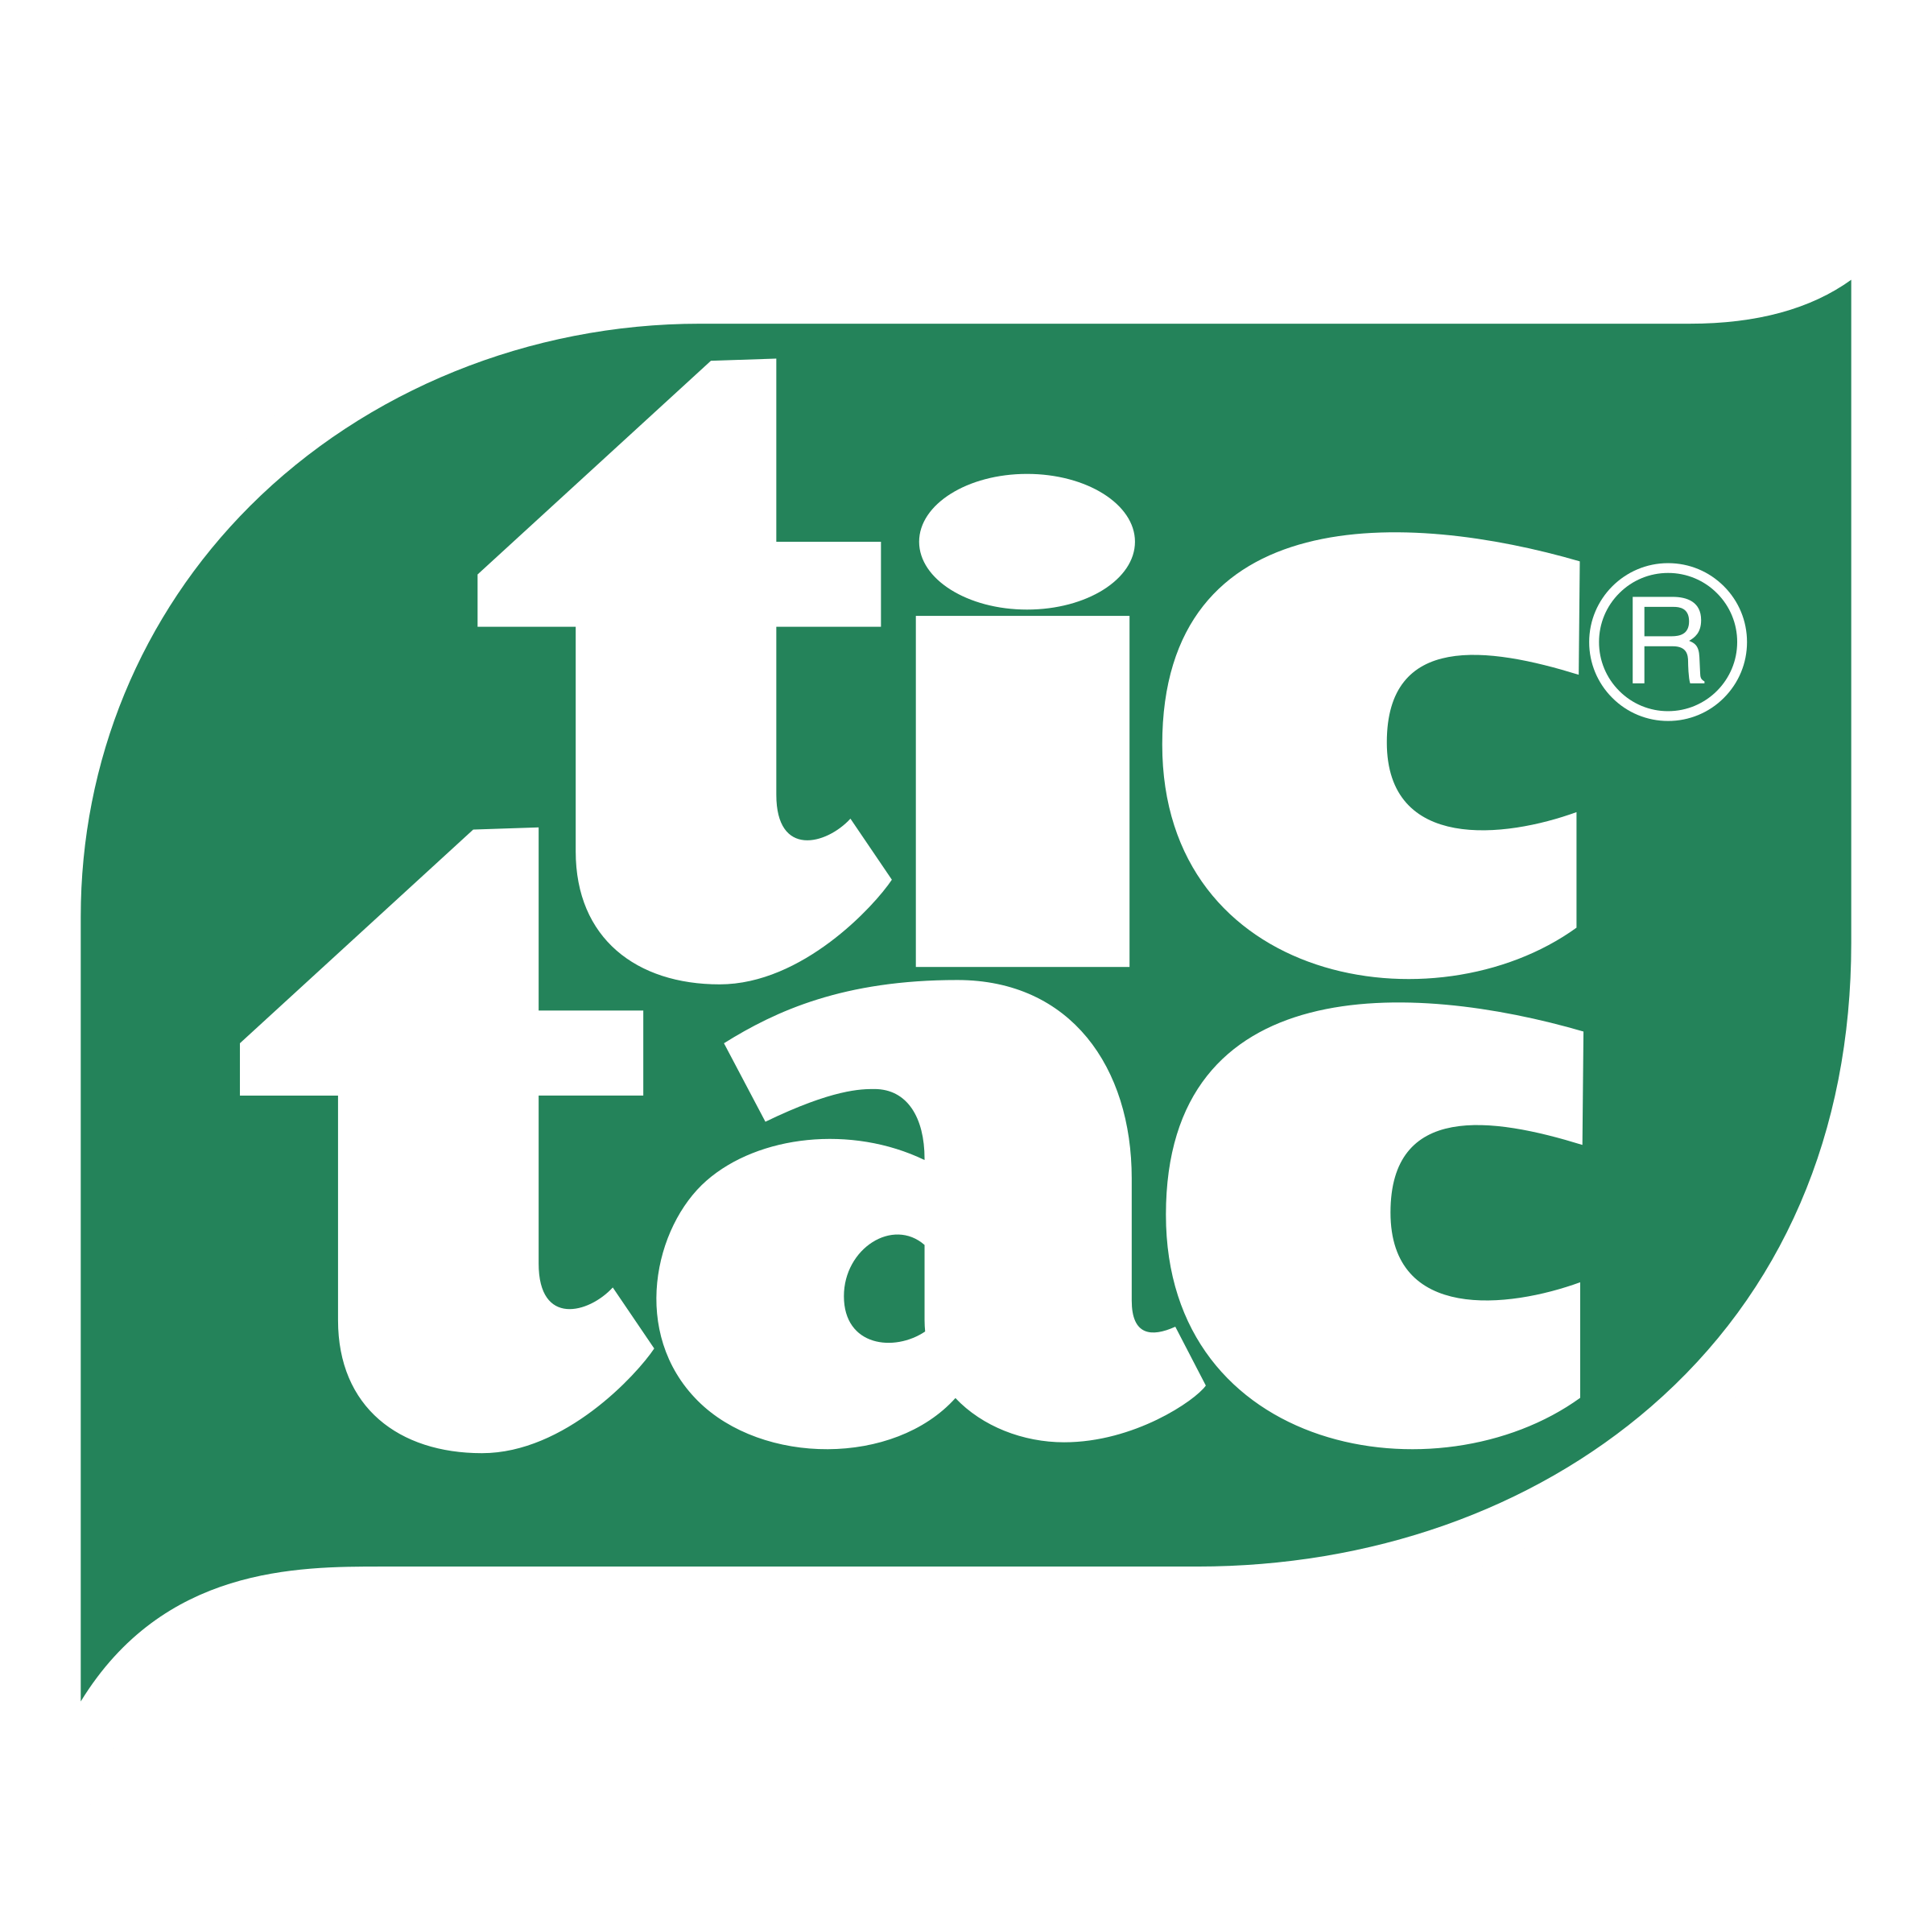 Tic Logo - Tic Tac Logo PNG Transparent & SVG Vector - Freebie Supply